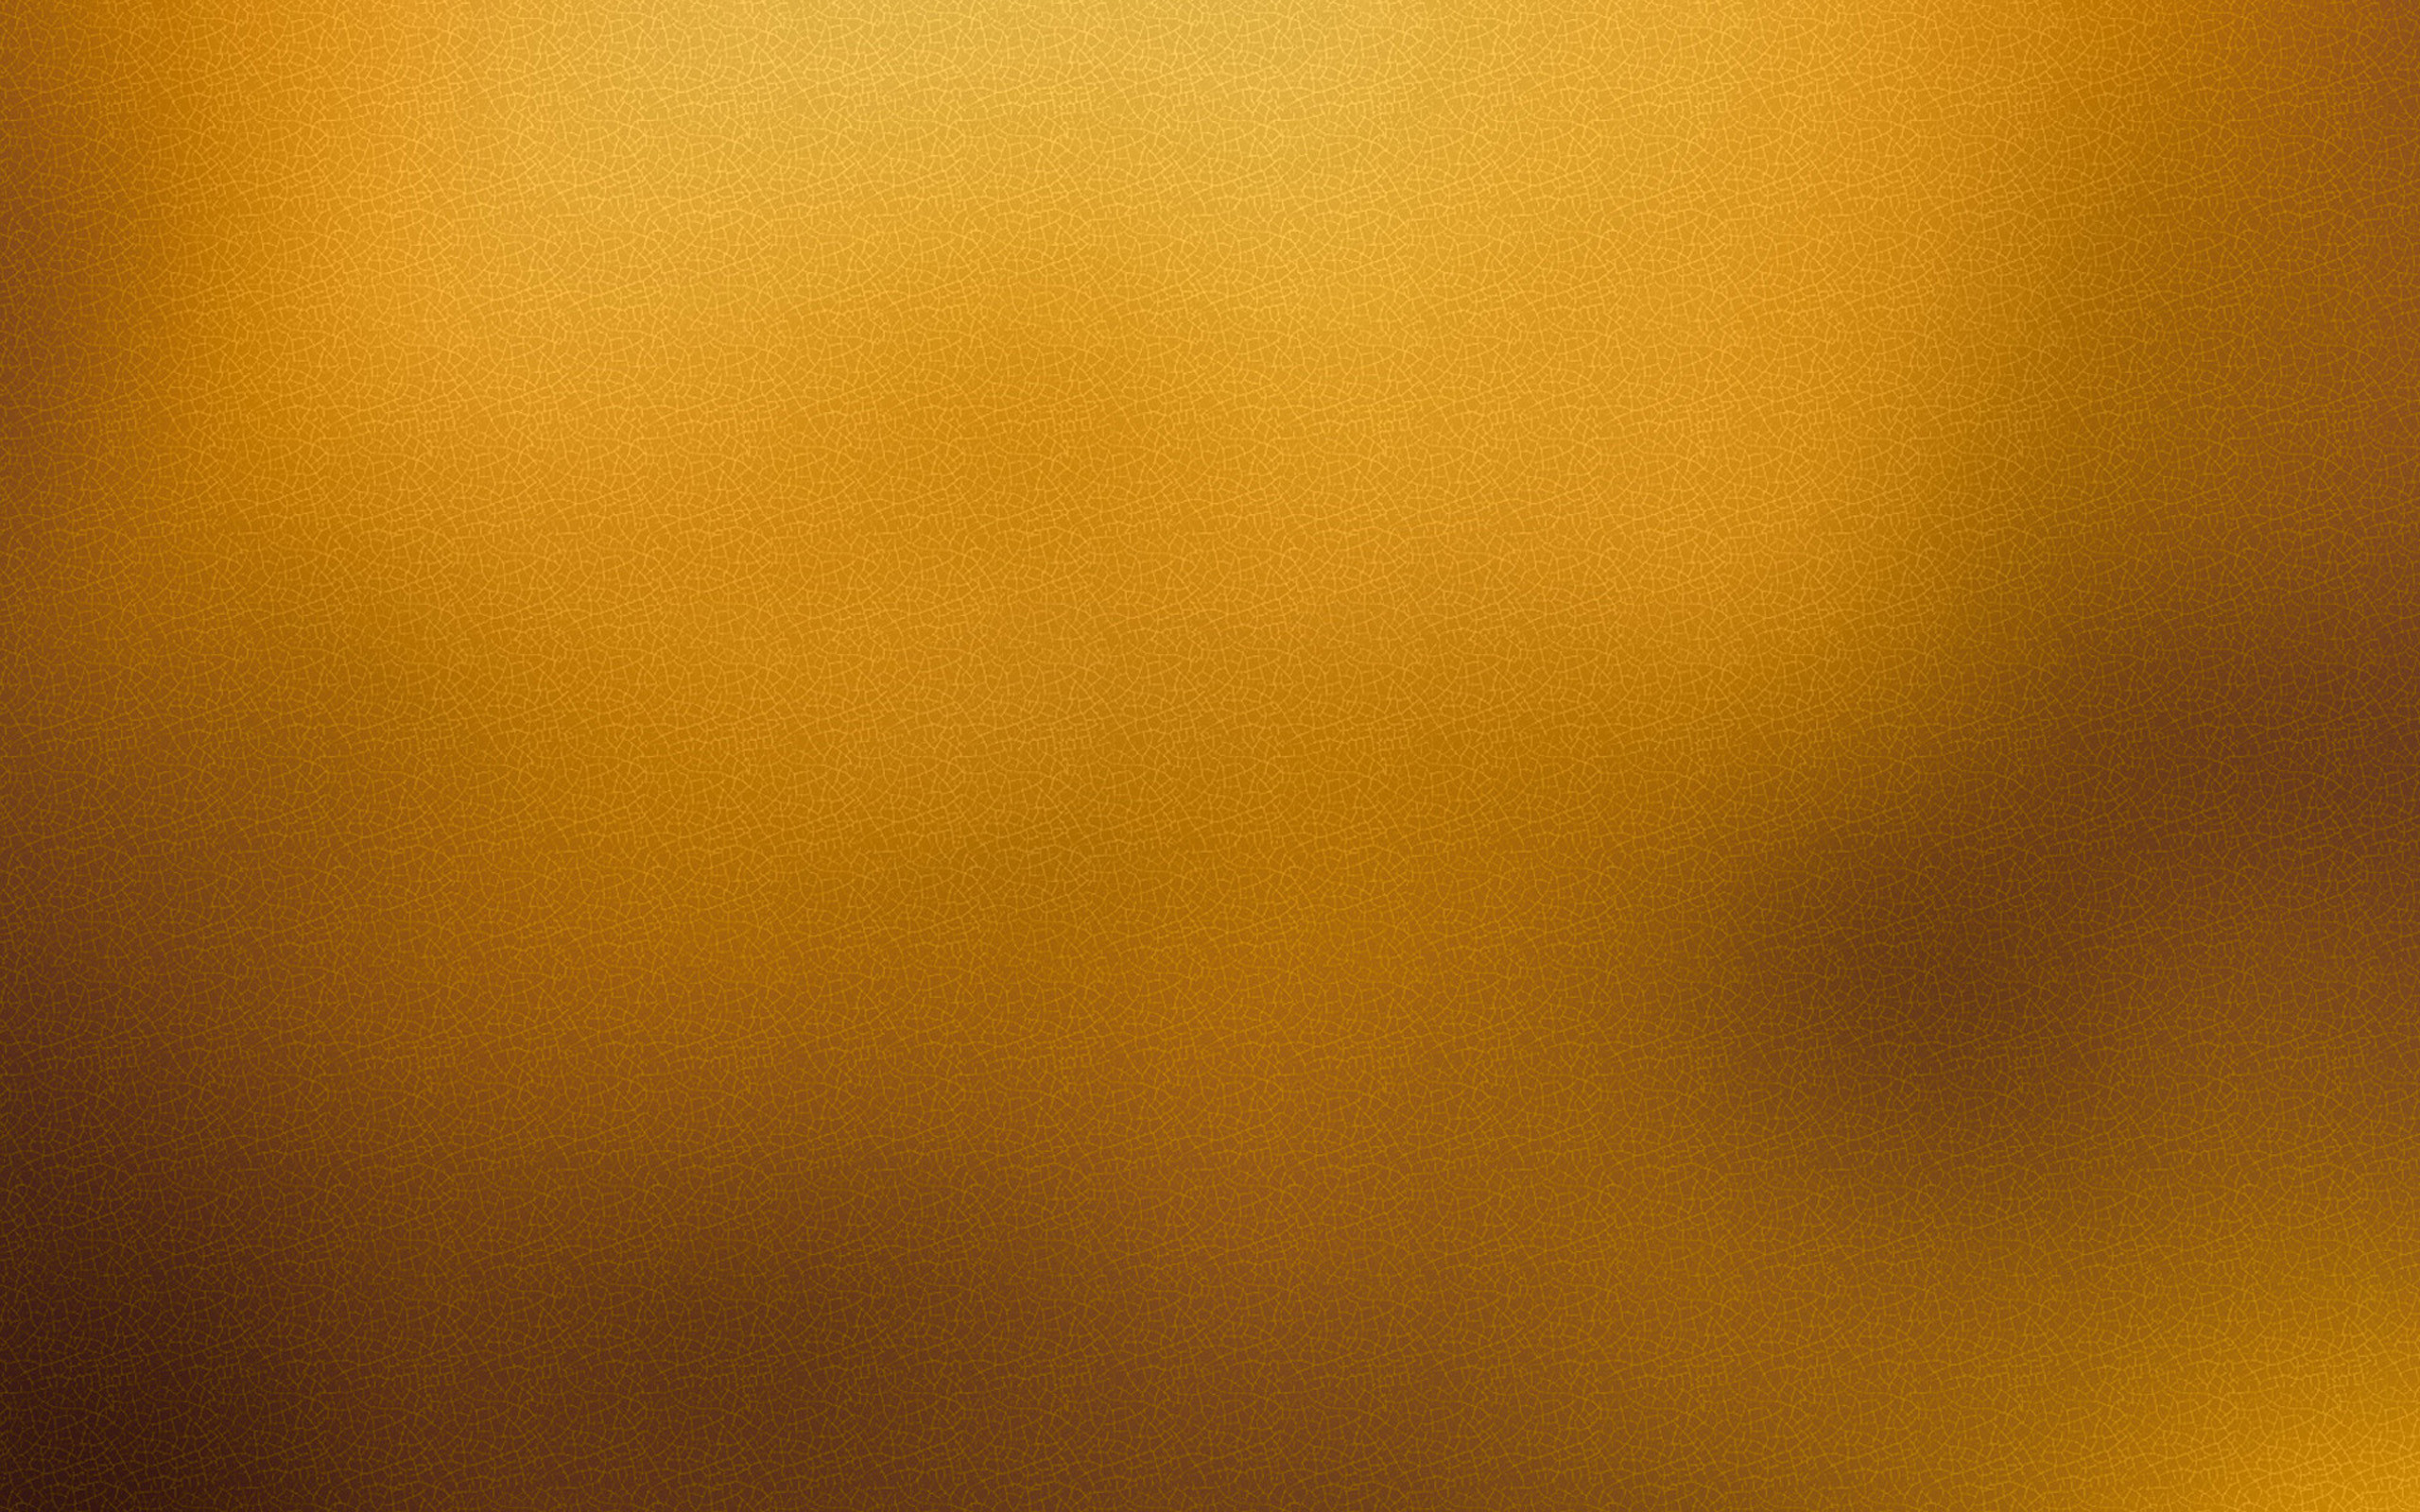 2560x1600 Golden color clipart background